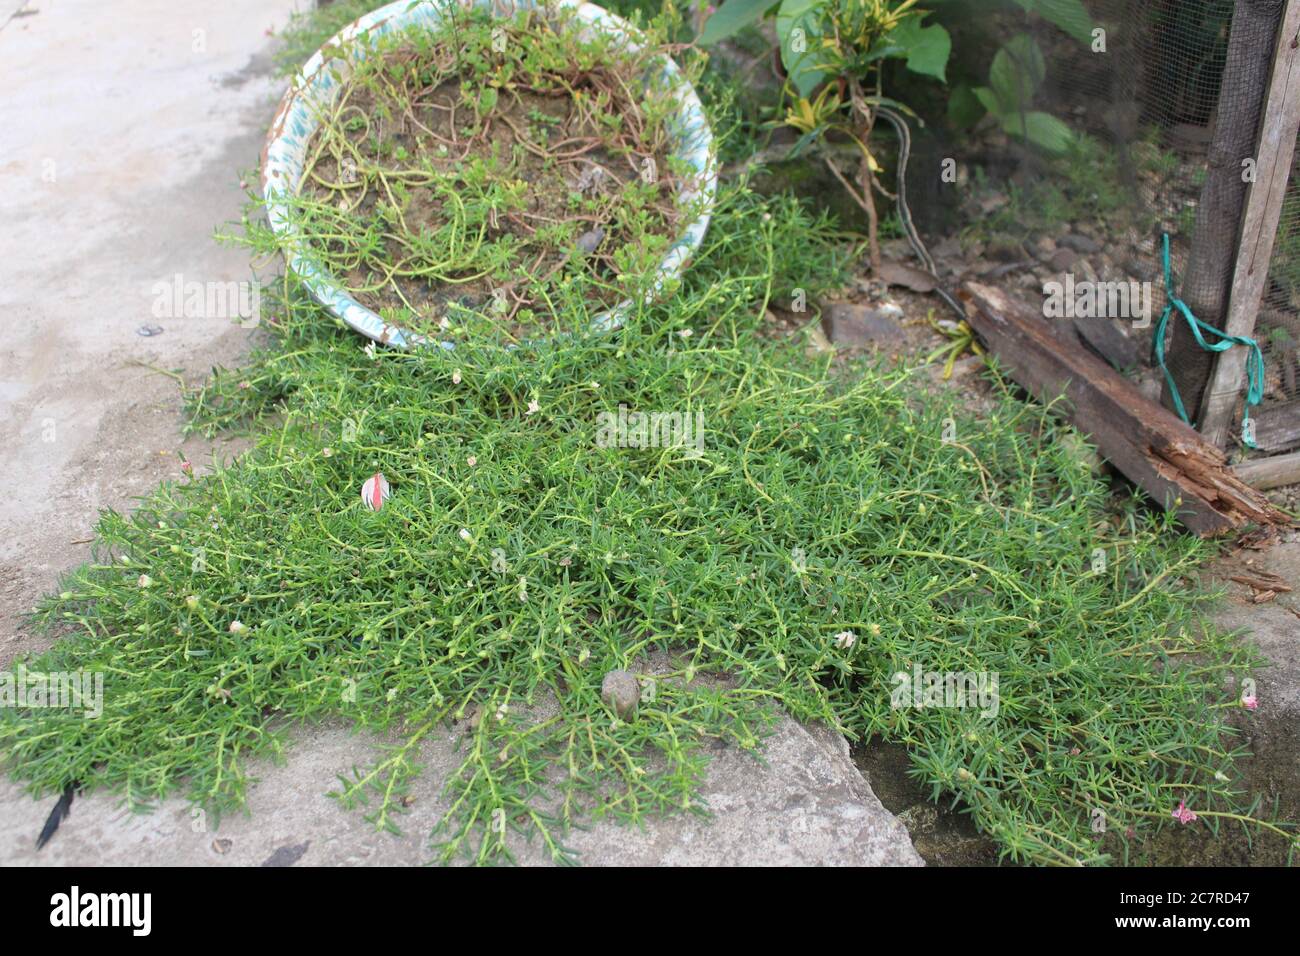 Closeup shot of Sagina plants in pots Stock Photo